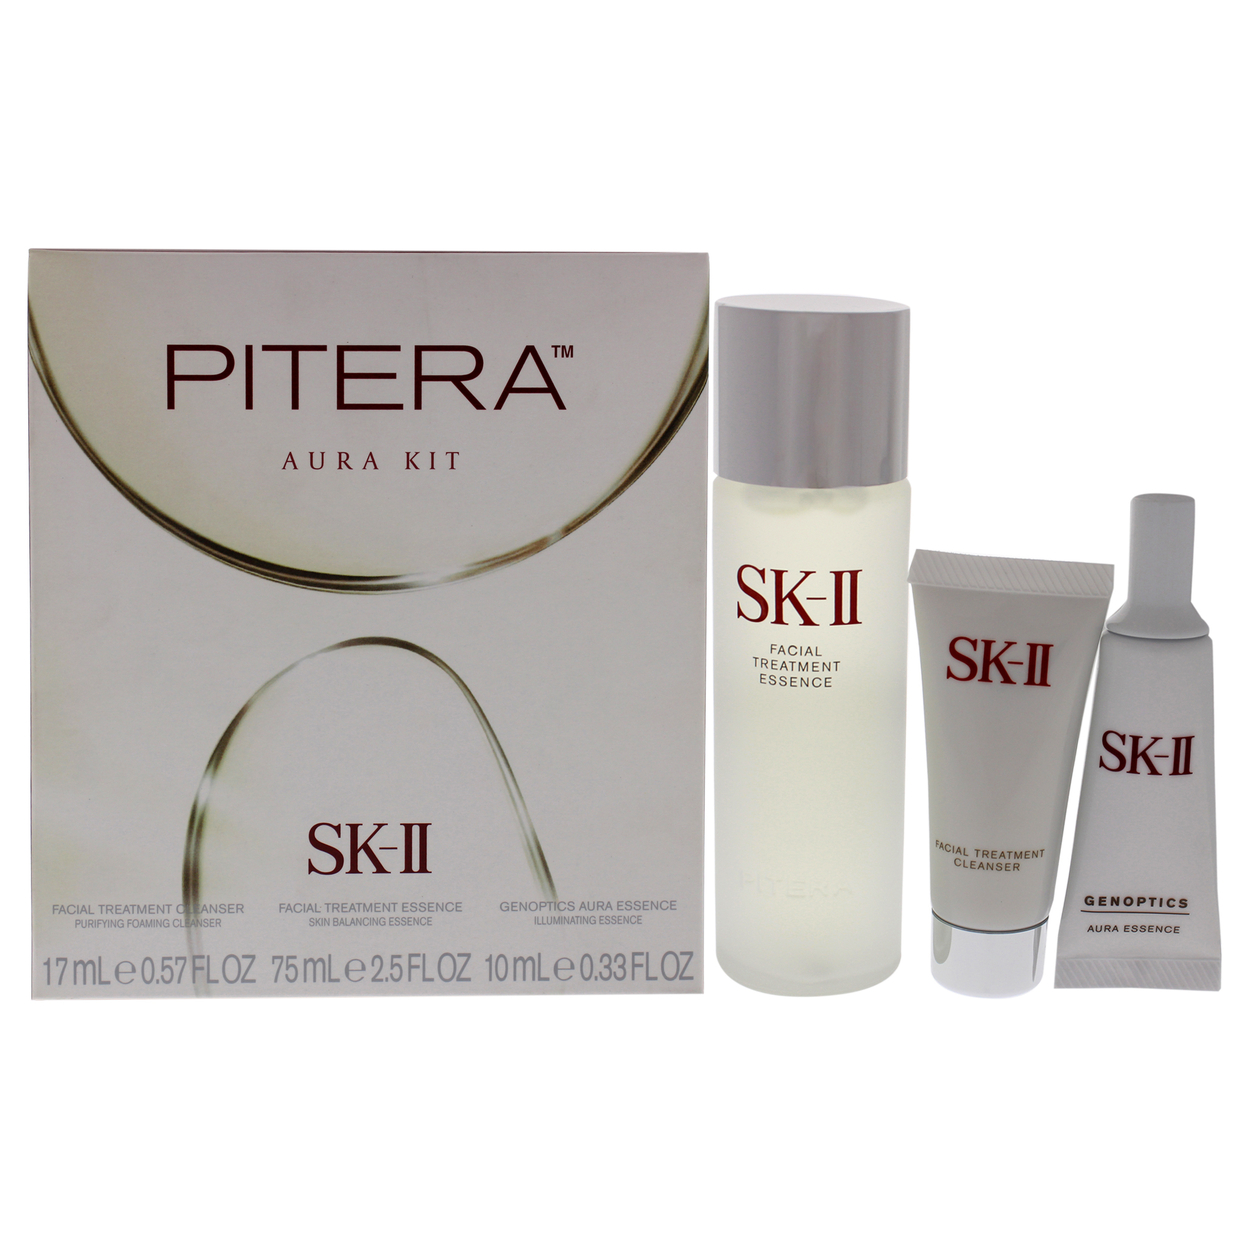 SK II Pitera Aura Kit 2.5oz Facial Treatment Essence, 0.5oz Facial Treatment Cleanser, 0.33oz Genoptics Aura Essence 3 Pc